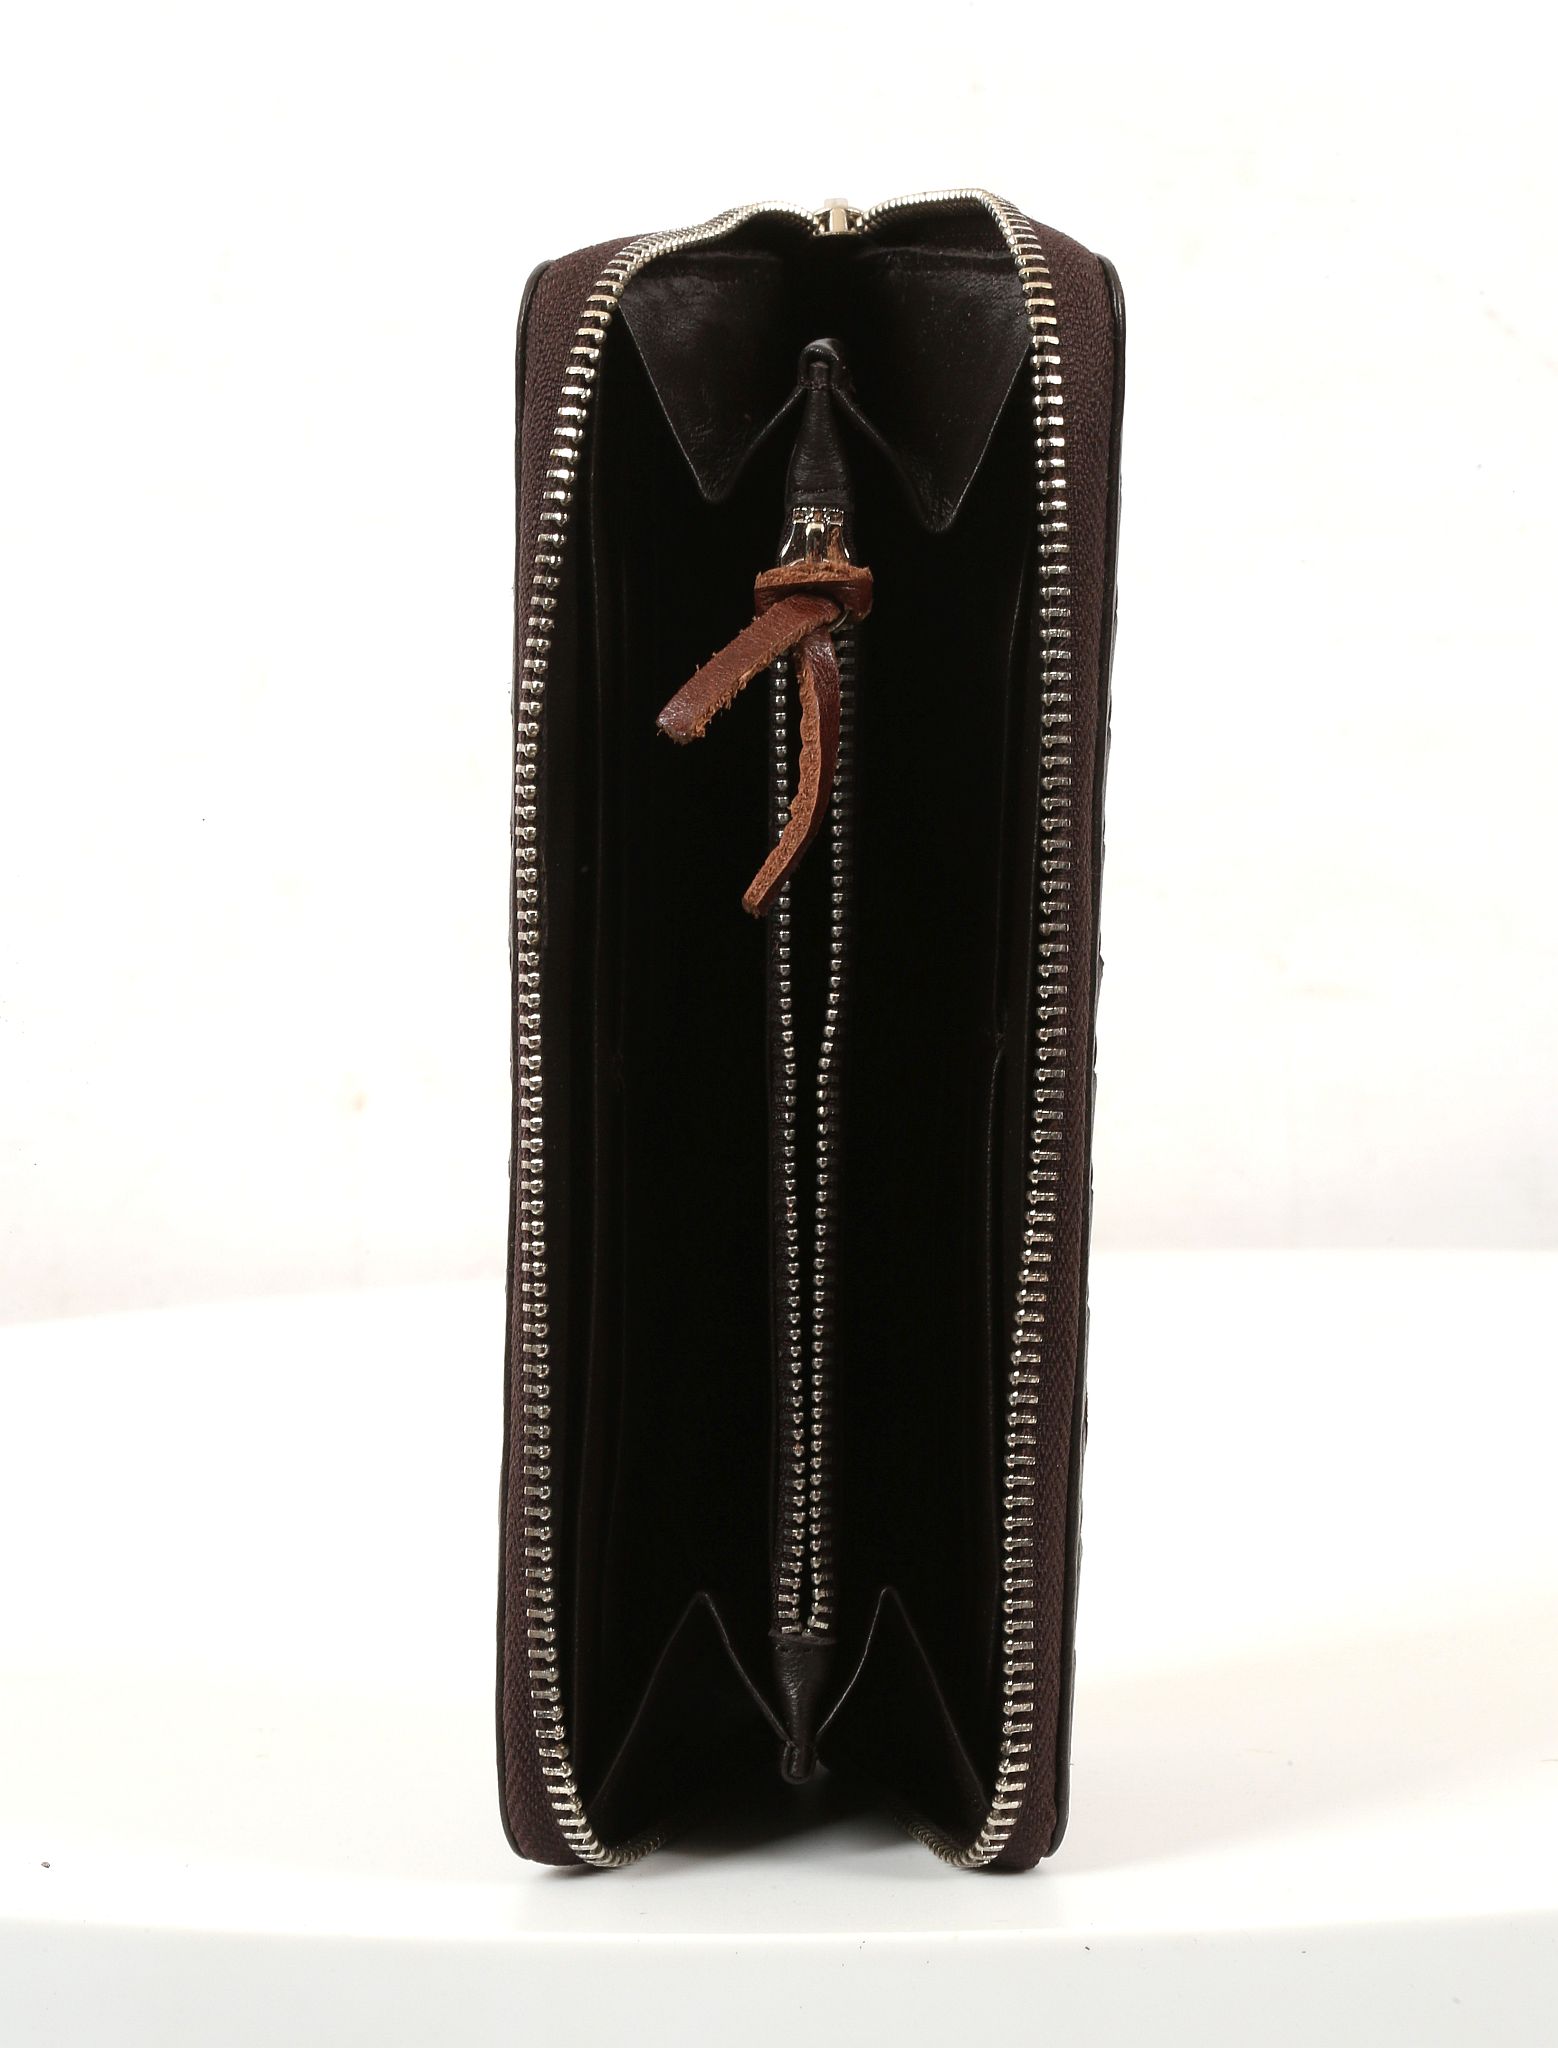 BOTTEGA VENETA PURSE, woven dark brown leather, 20cm wide, 10cm high - Image 3 of 8